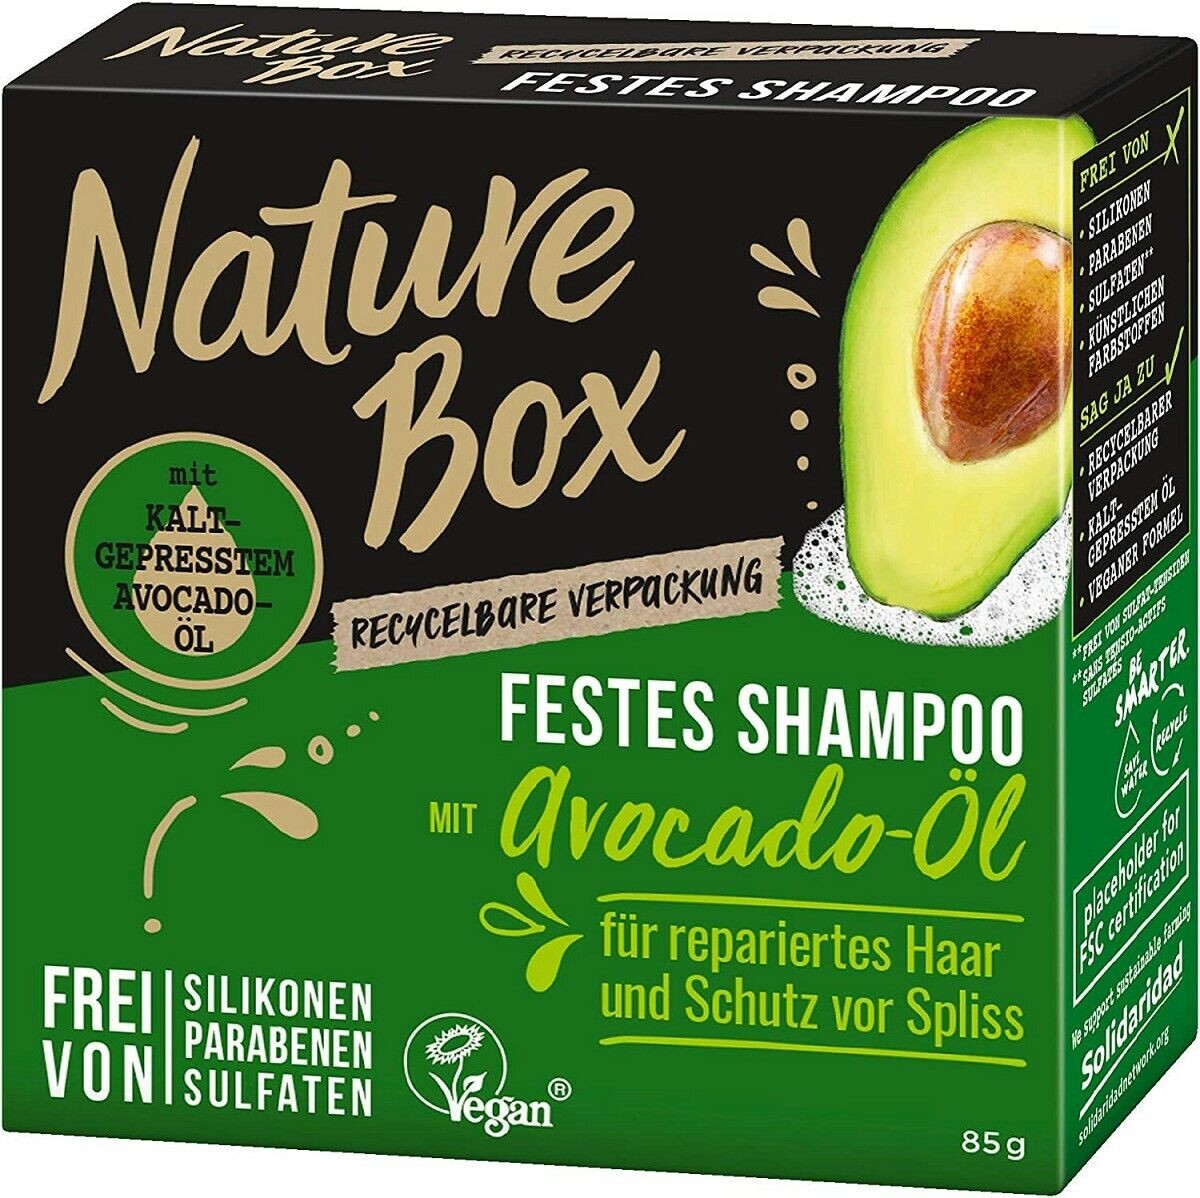 Nature Box Festes Shampoo mit Avocado-Öl 85g